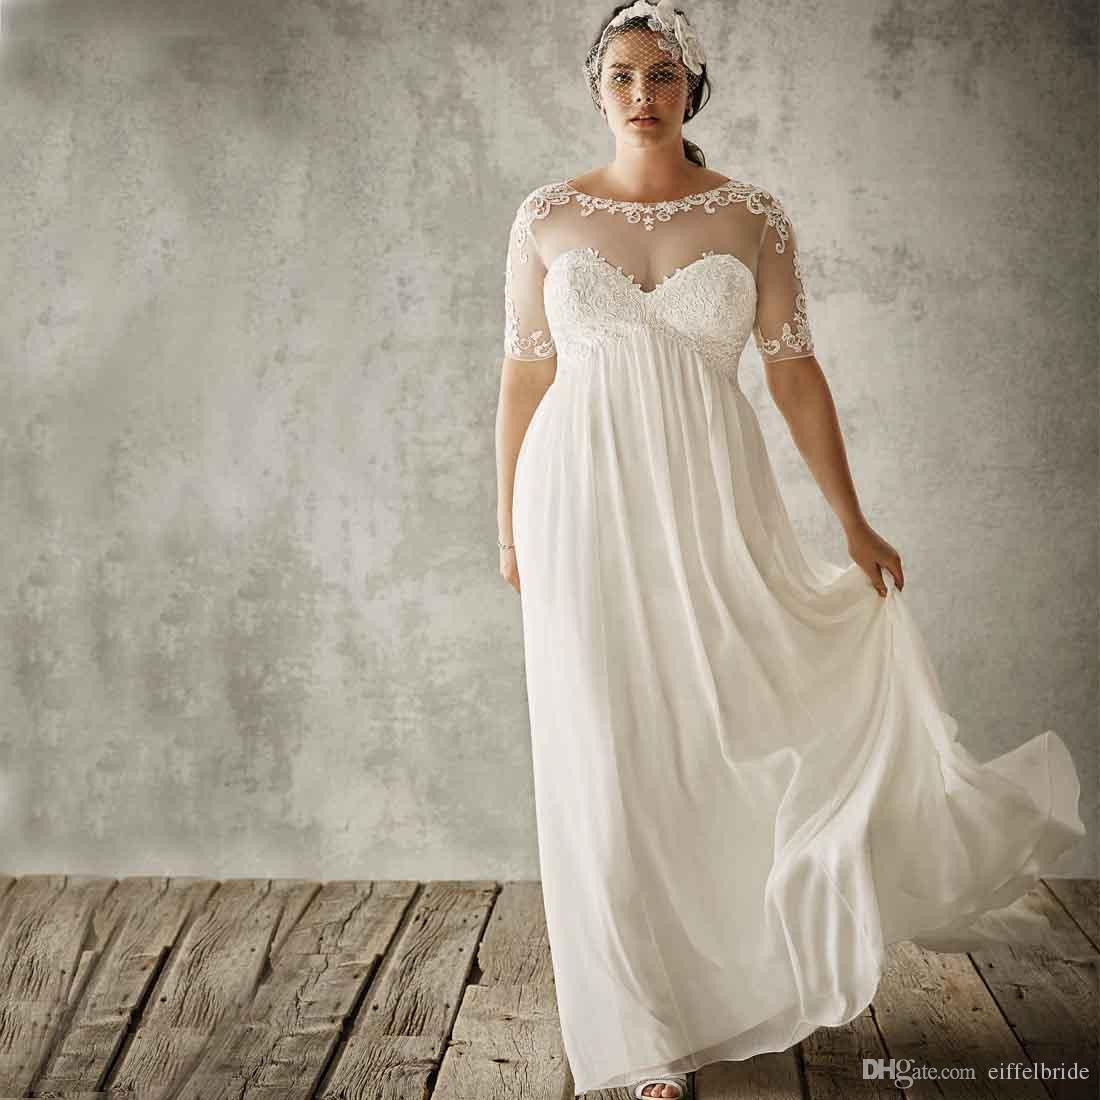 Discount Plus Size Wedding Dresses
 Cheap Beach Wedding Dresses Plus Size 2016 y Sheer Lace